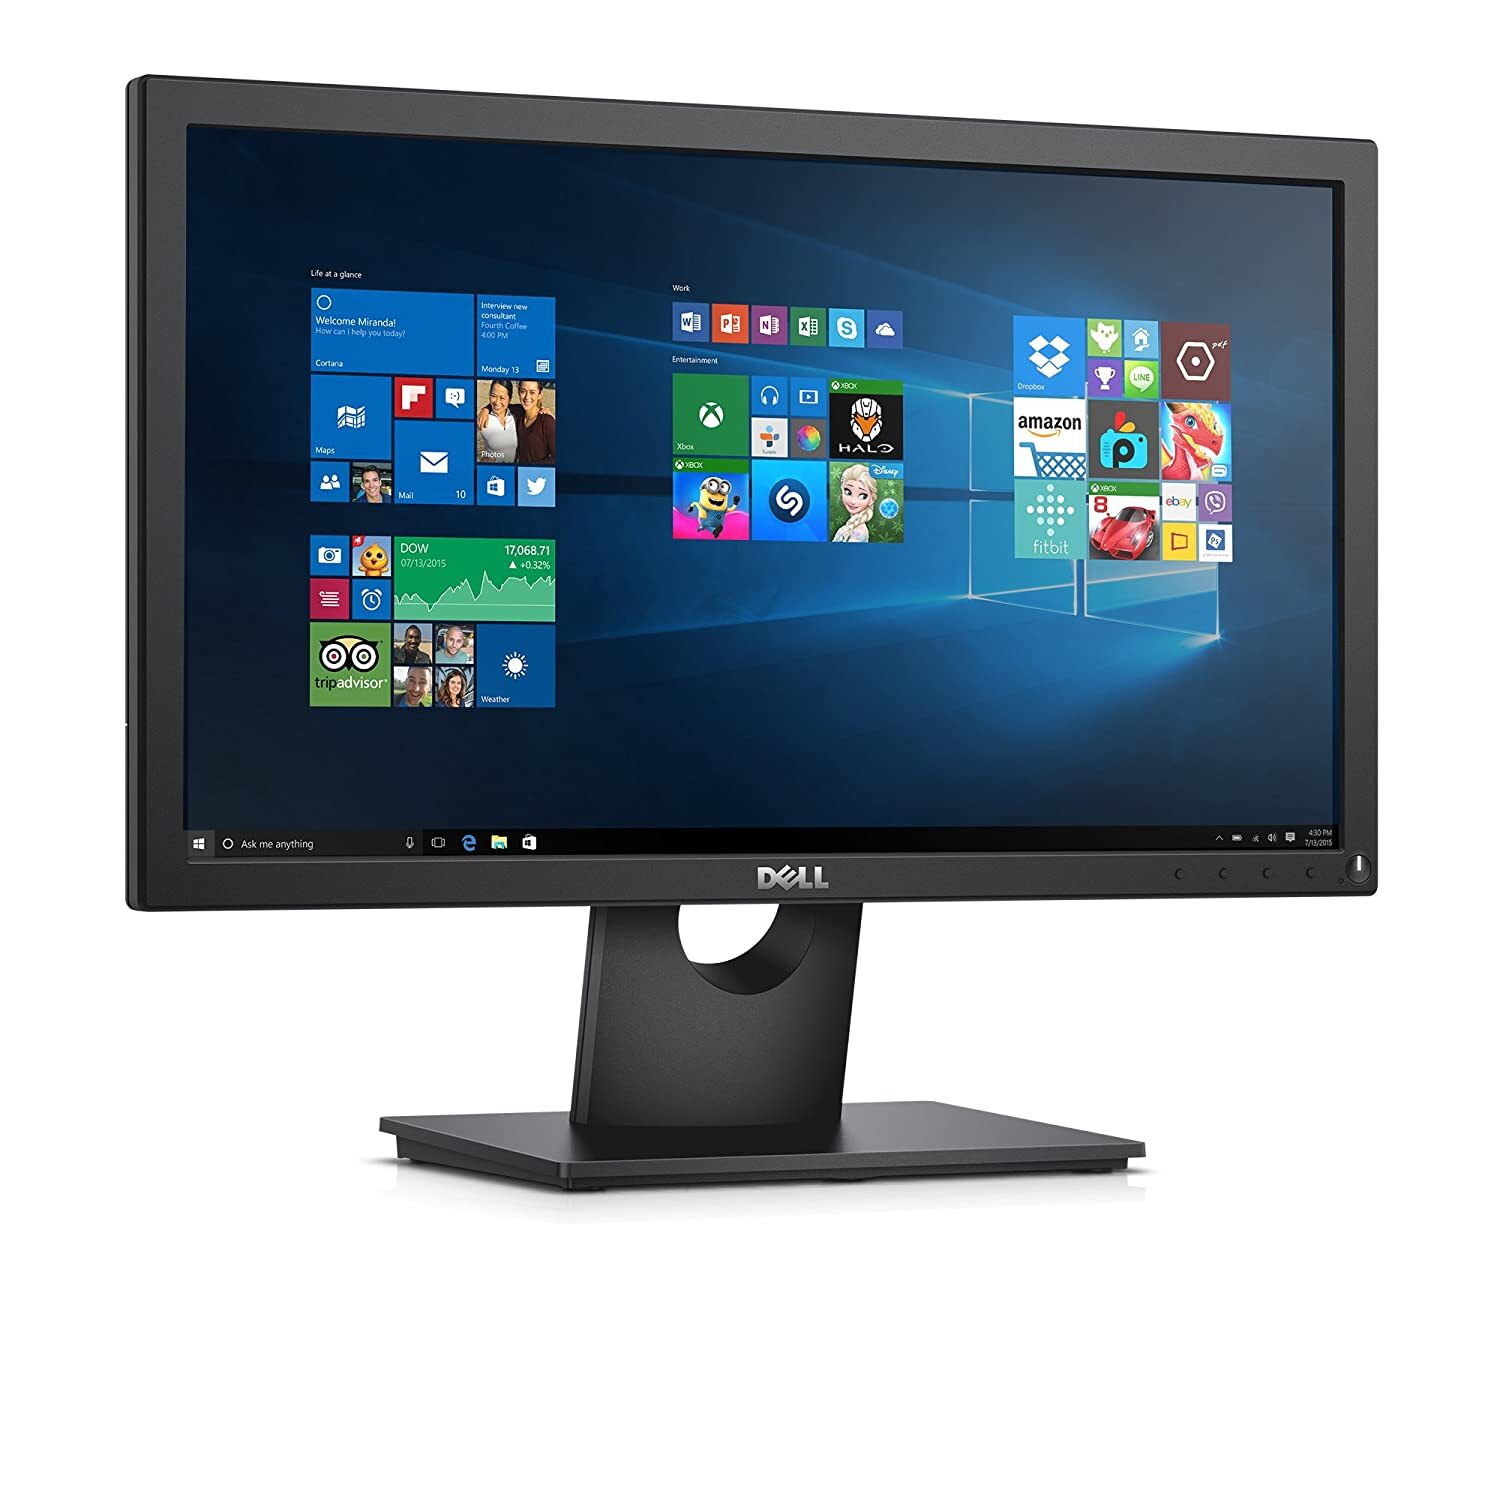 Dell 19.5 inch (49.41 cm) LED Backlit Computer Monitor - HD, TN Panel with VGA Port - E2016HV (Black)